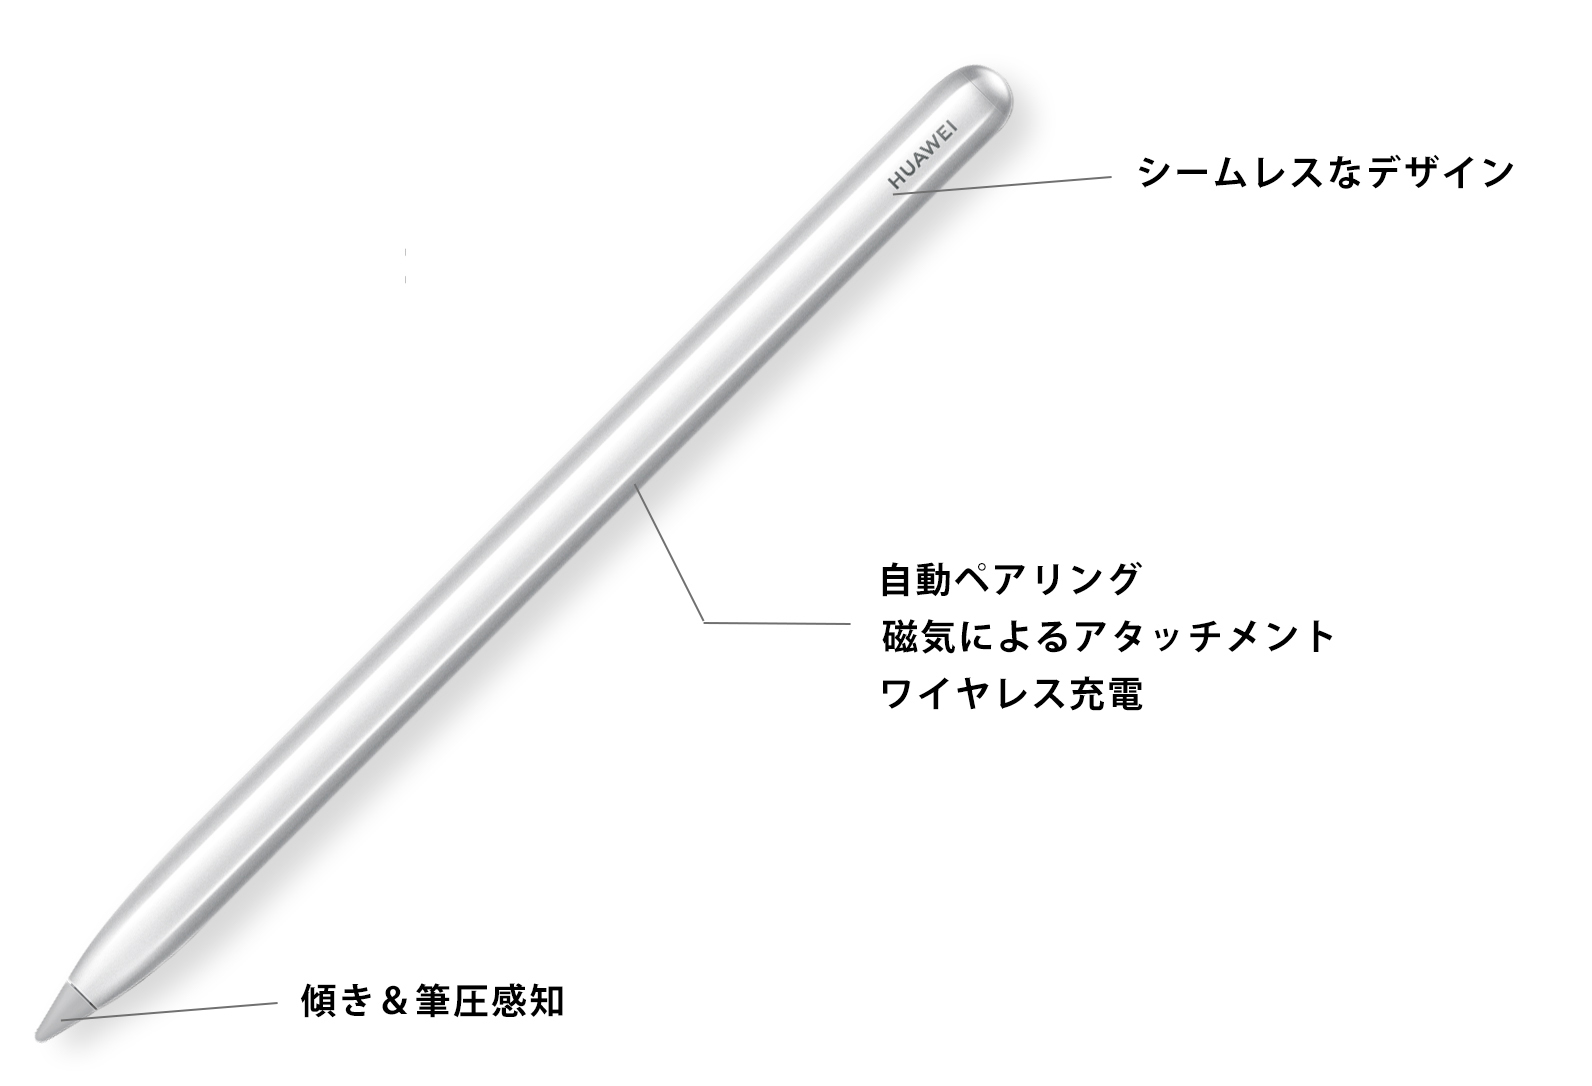 HUAWEI MatePad Pro & M-Pencil